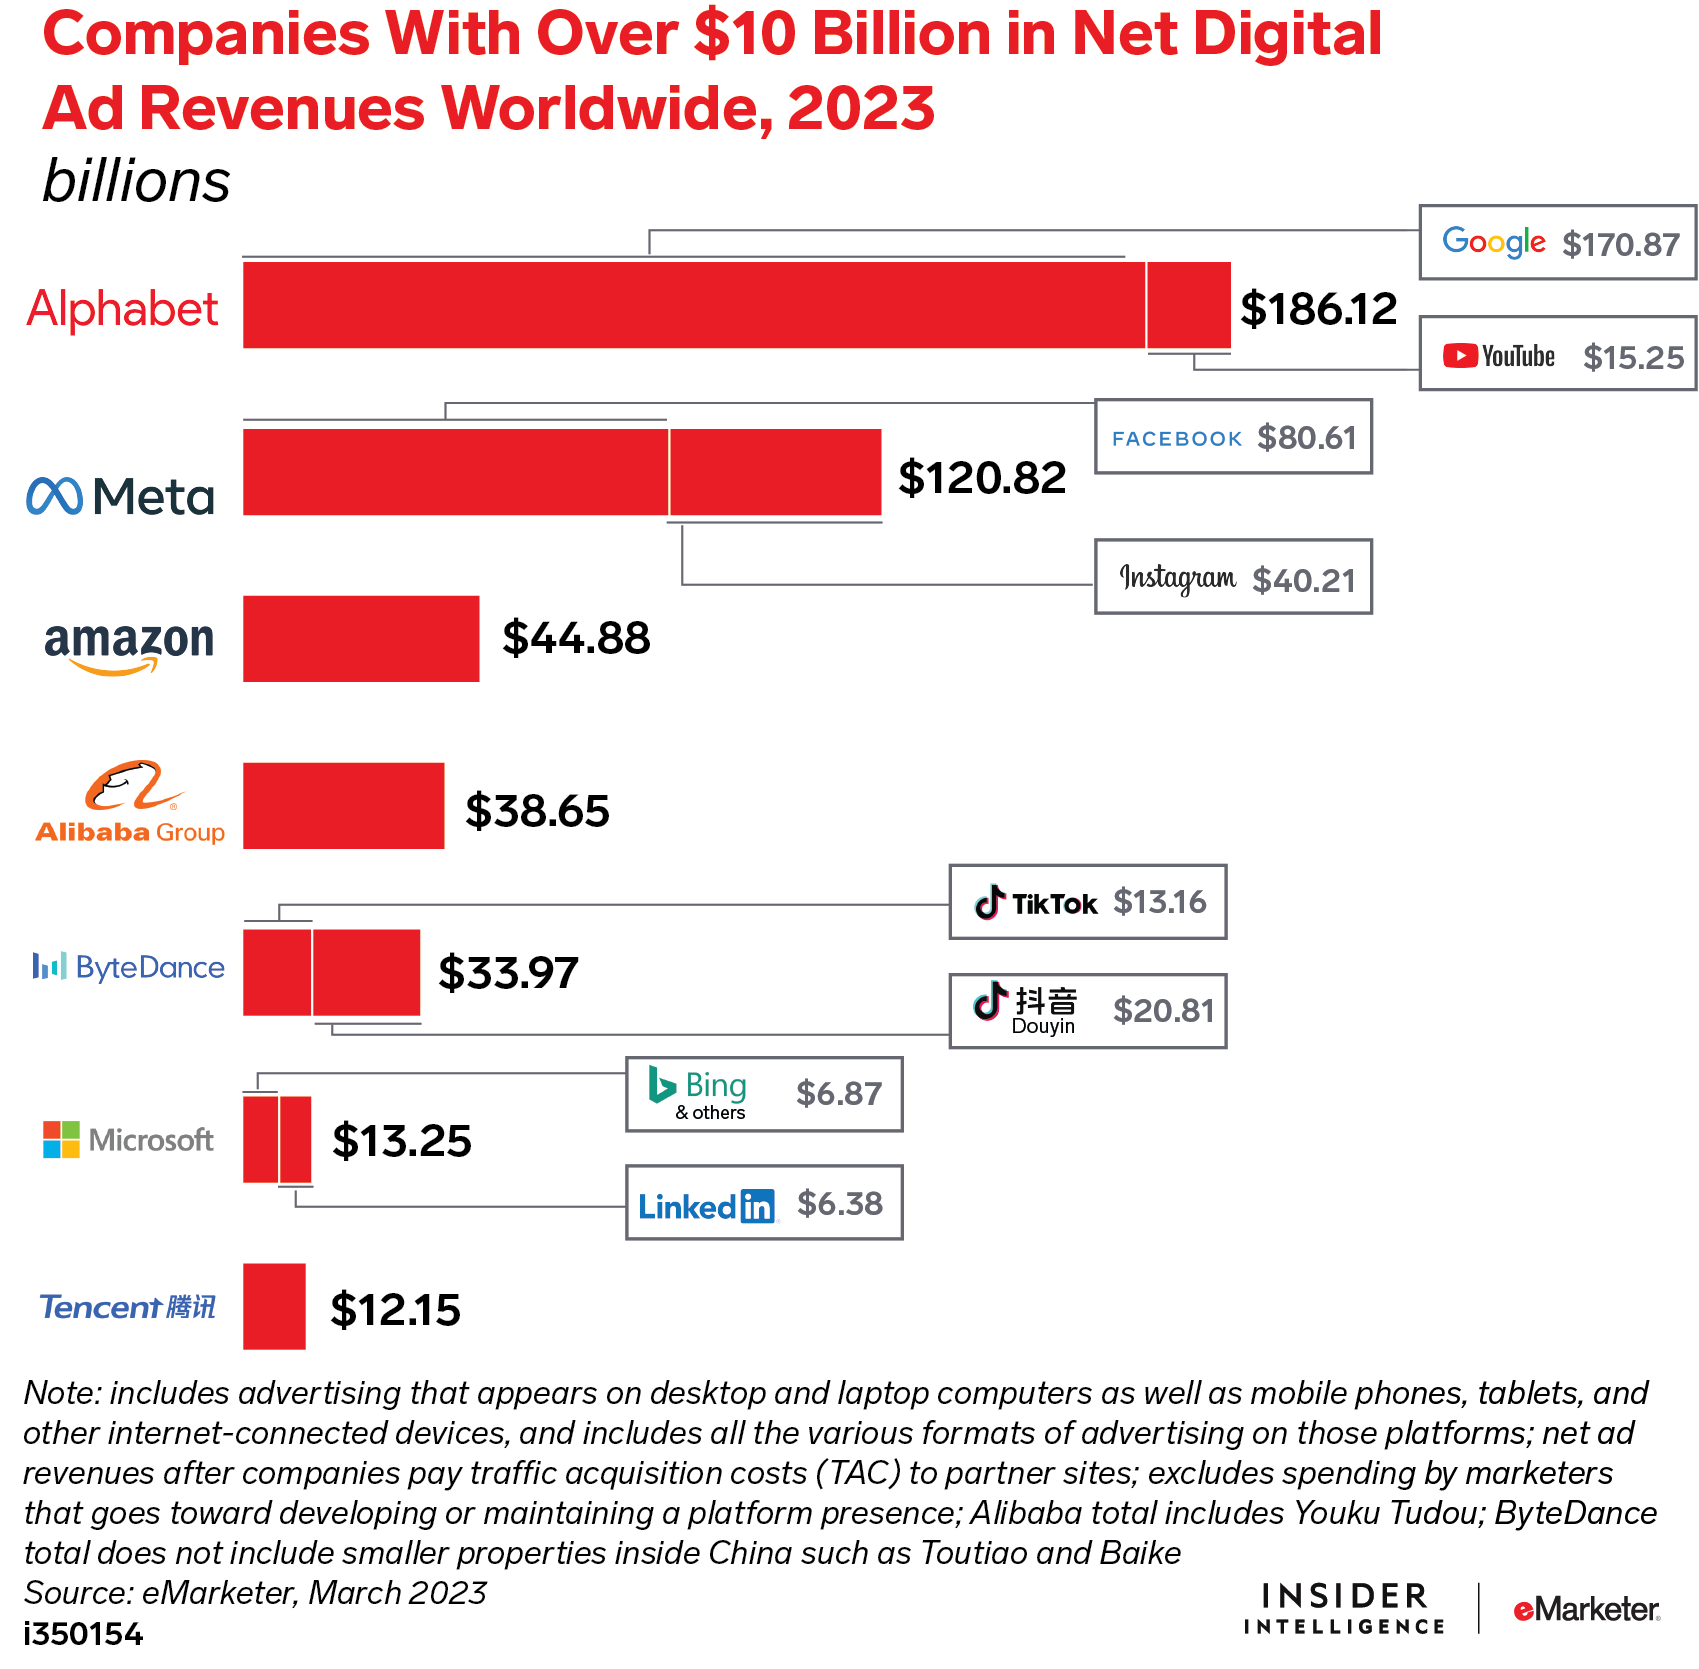 Companies With Over $10 Billion in Net Digital Ad Revenues Worldwide, 2023 (billions)